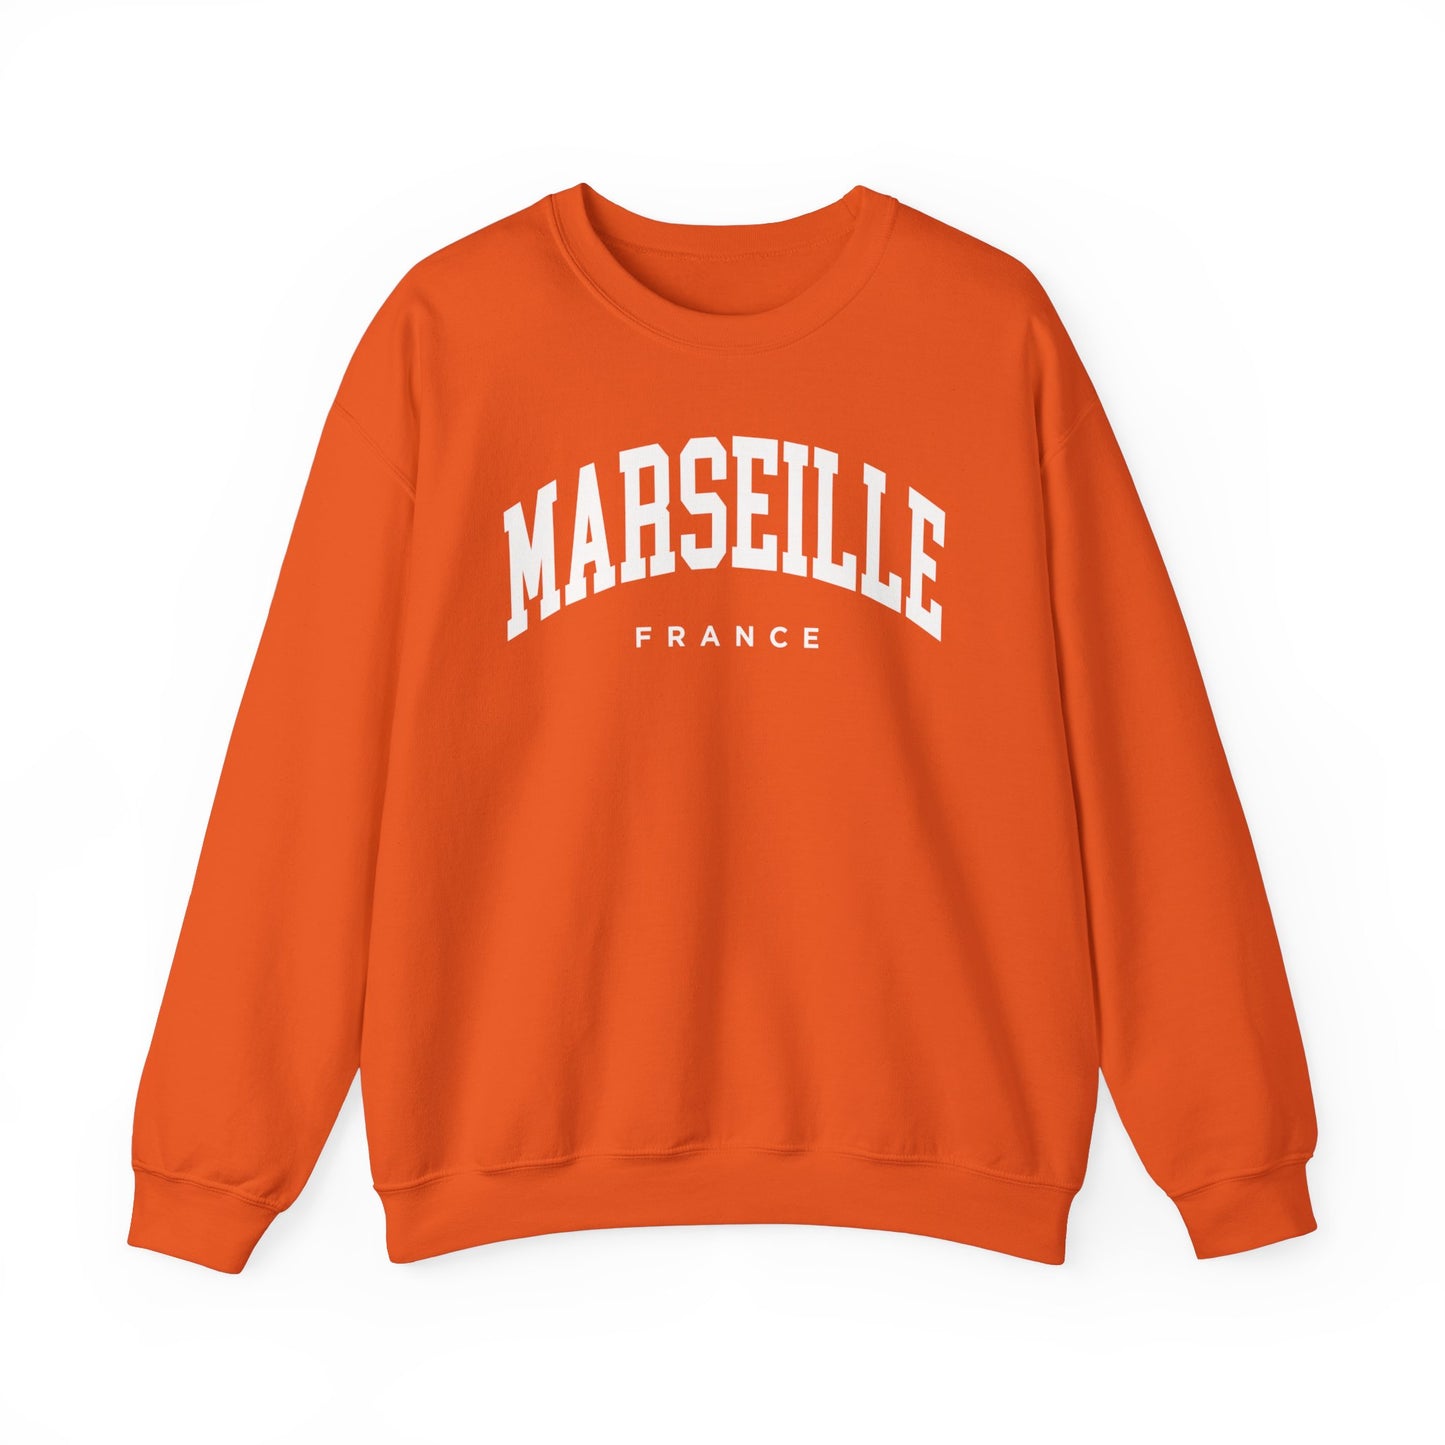 Marseille France Sweatshirt